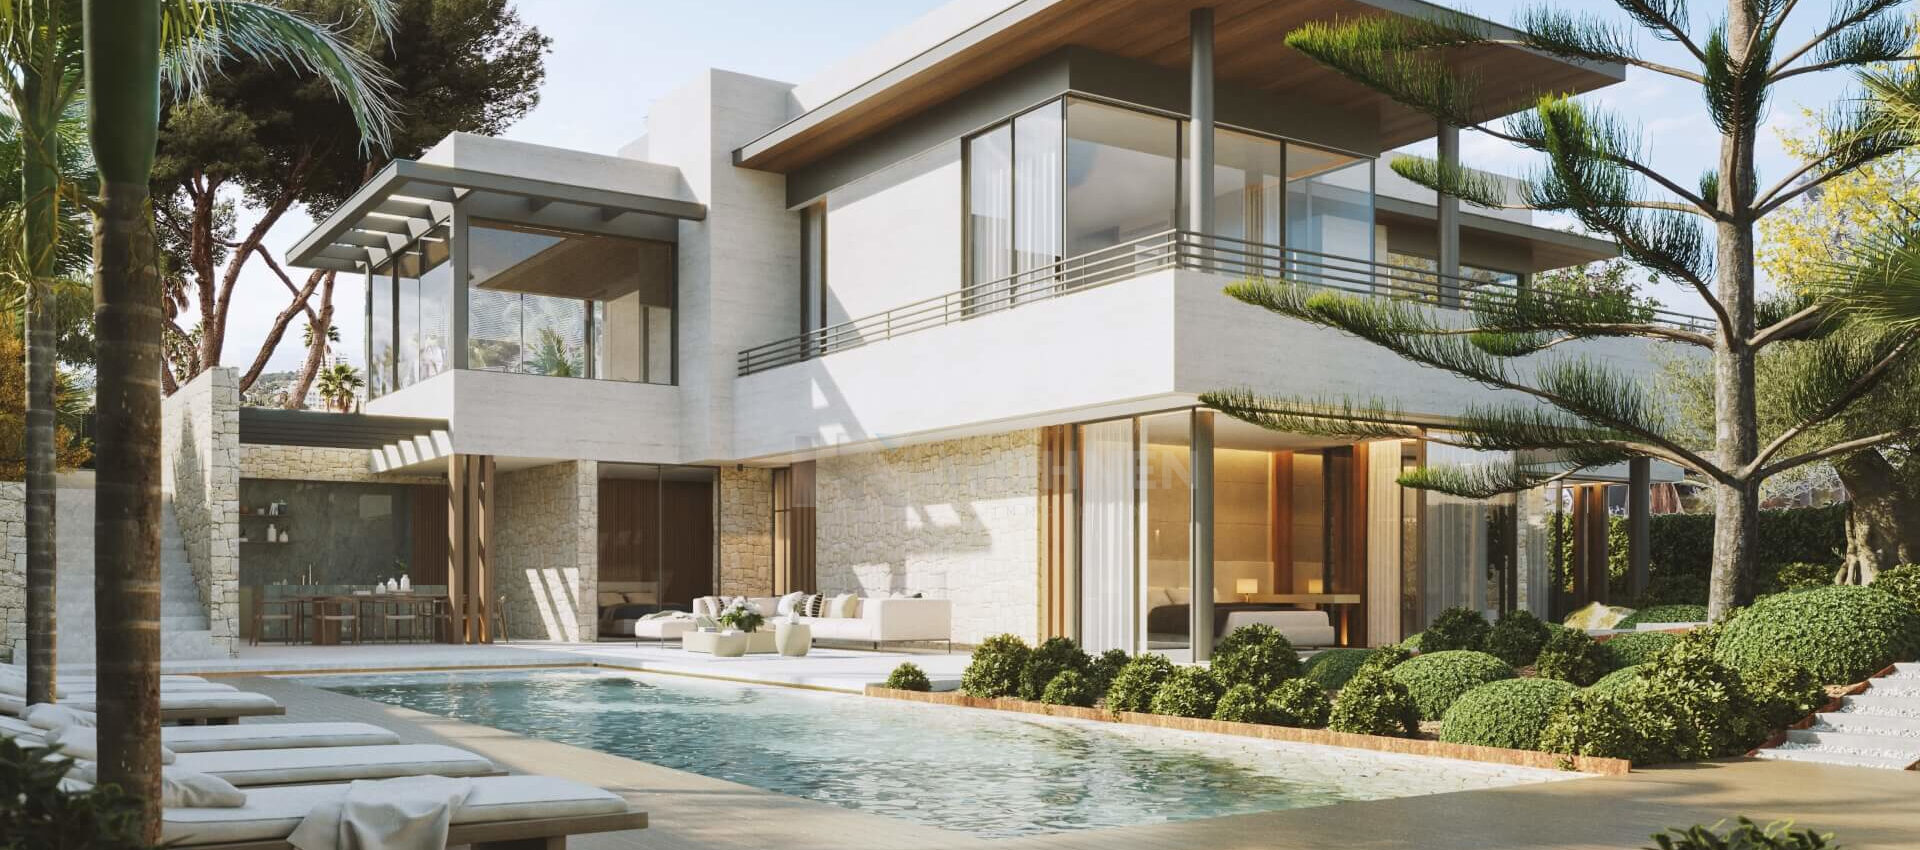 Atemberaubende moderne Villa mit Panoramablick auf das Meer Goldene Meile Marbella